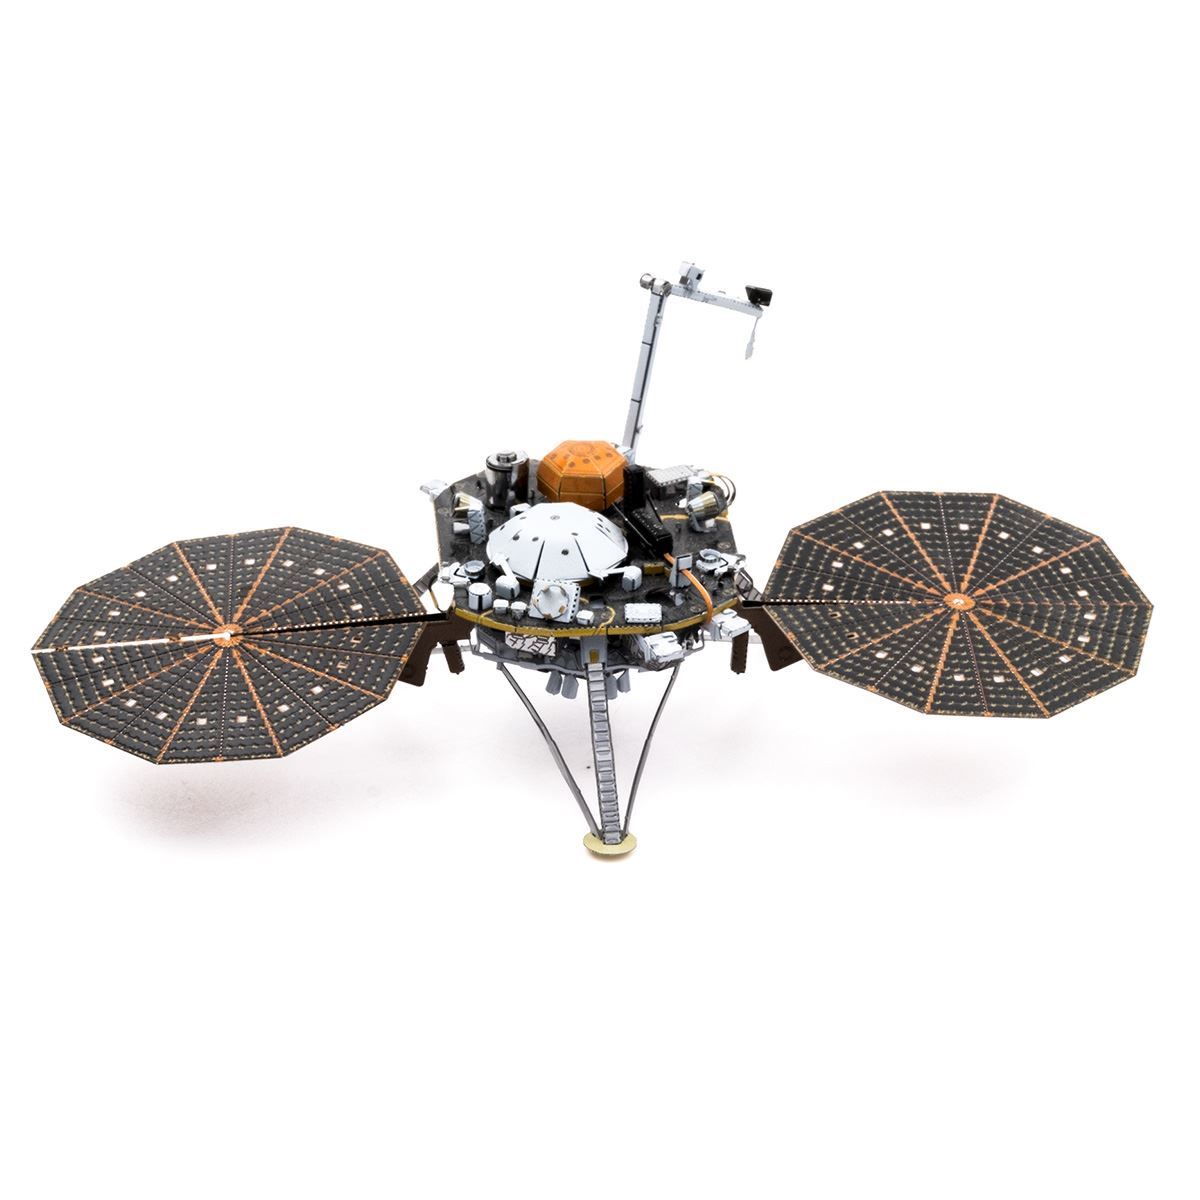 New Project Fascinations Metal Earth InSight Mars Lander 3D Model Kit MMS193 